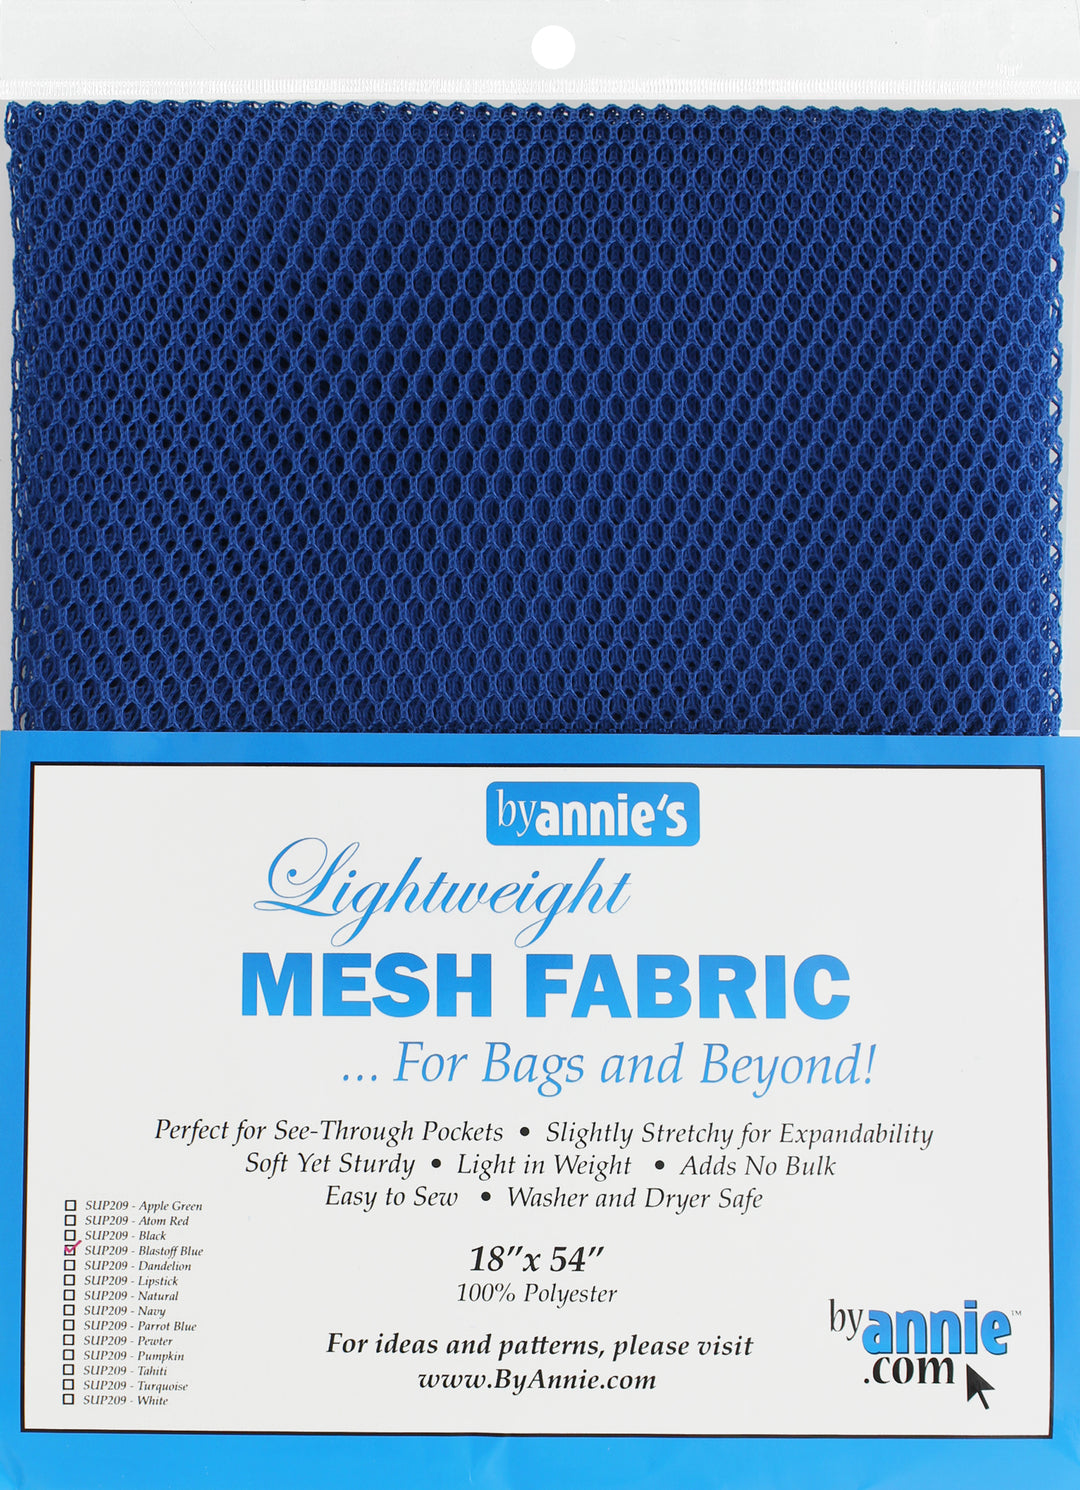 Lightweight Mesh Fabric from ByAnnie